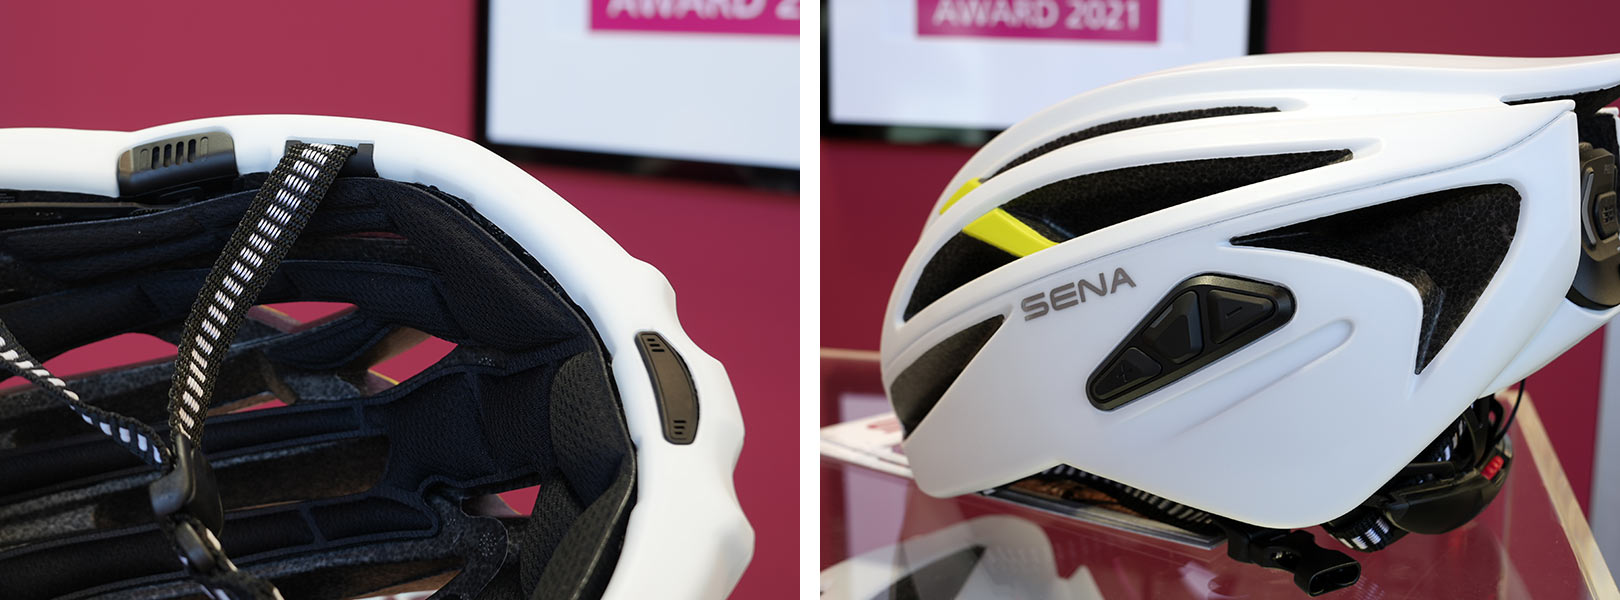 control buttons for sena r2 road bike helmet with intercom wireless communication